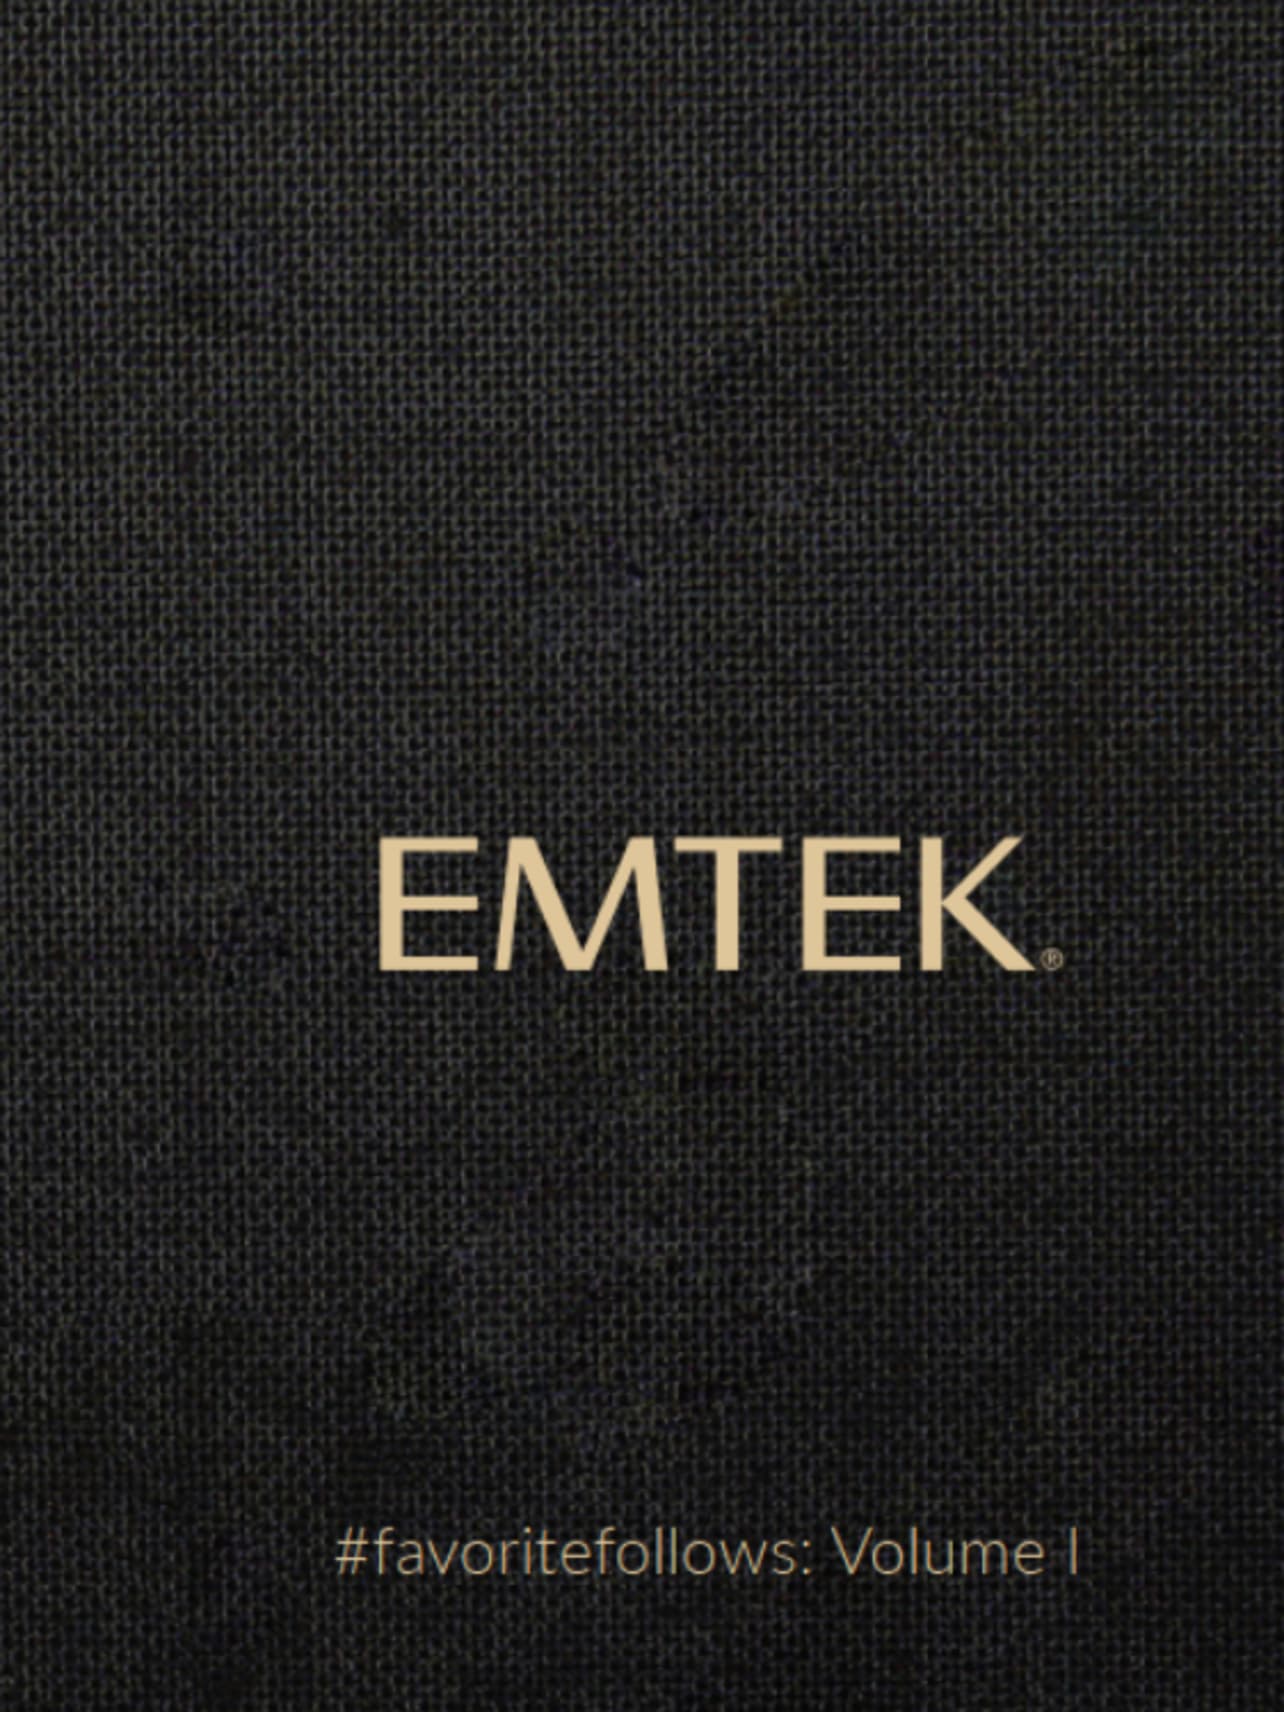 Emtek's #FavoriteFollows Volume 1